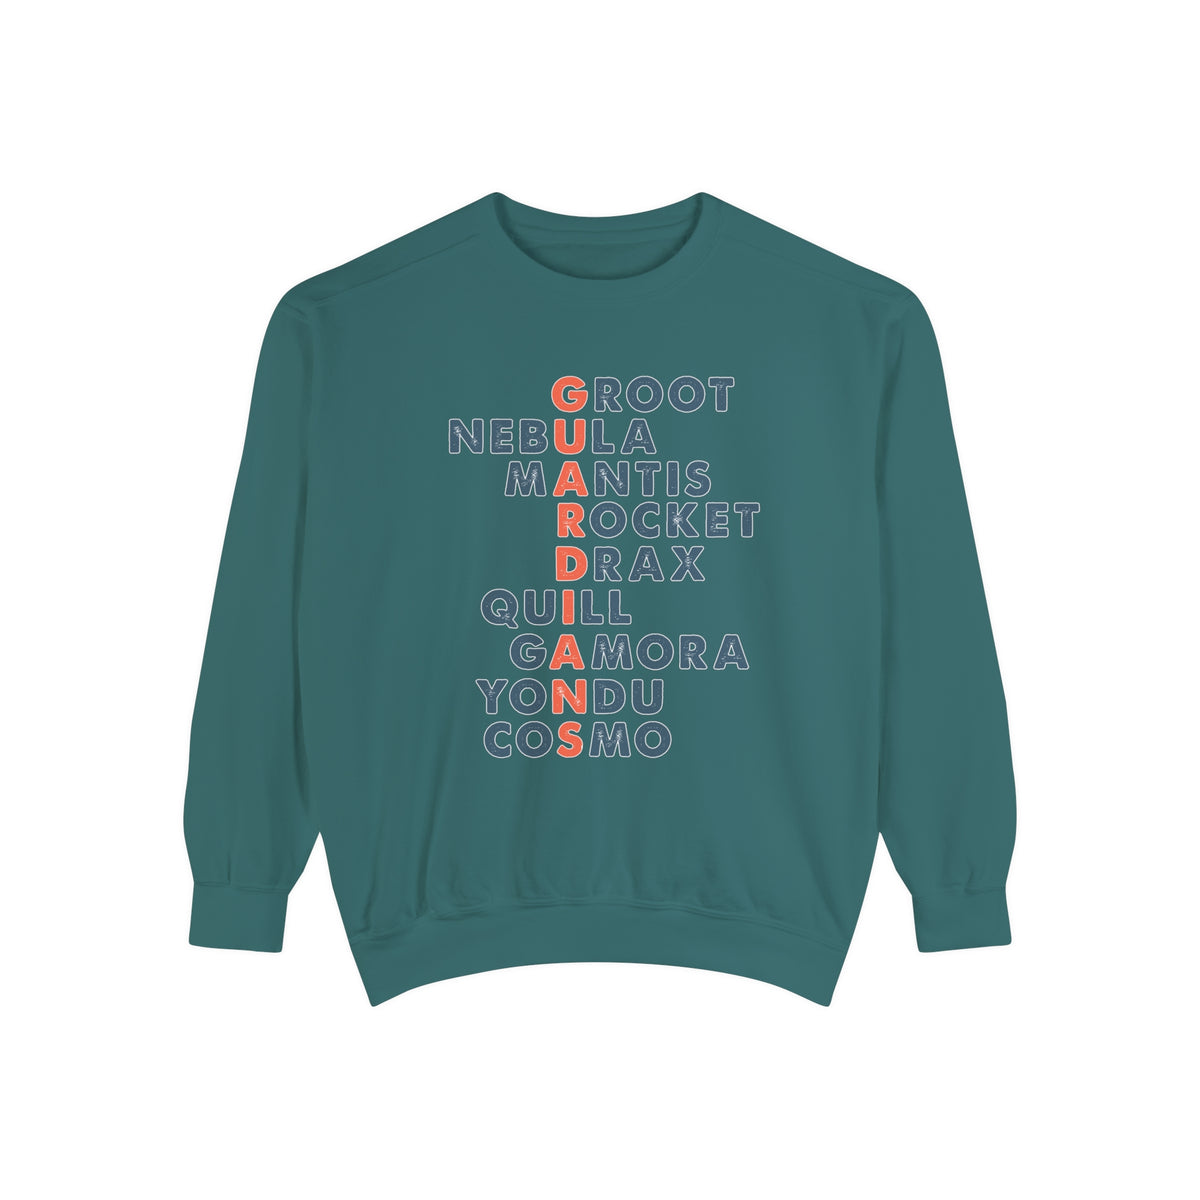 Guardians Unisex Garment-Dyed Sweatshirt